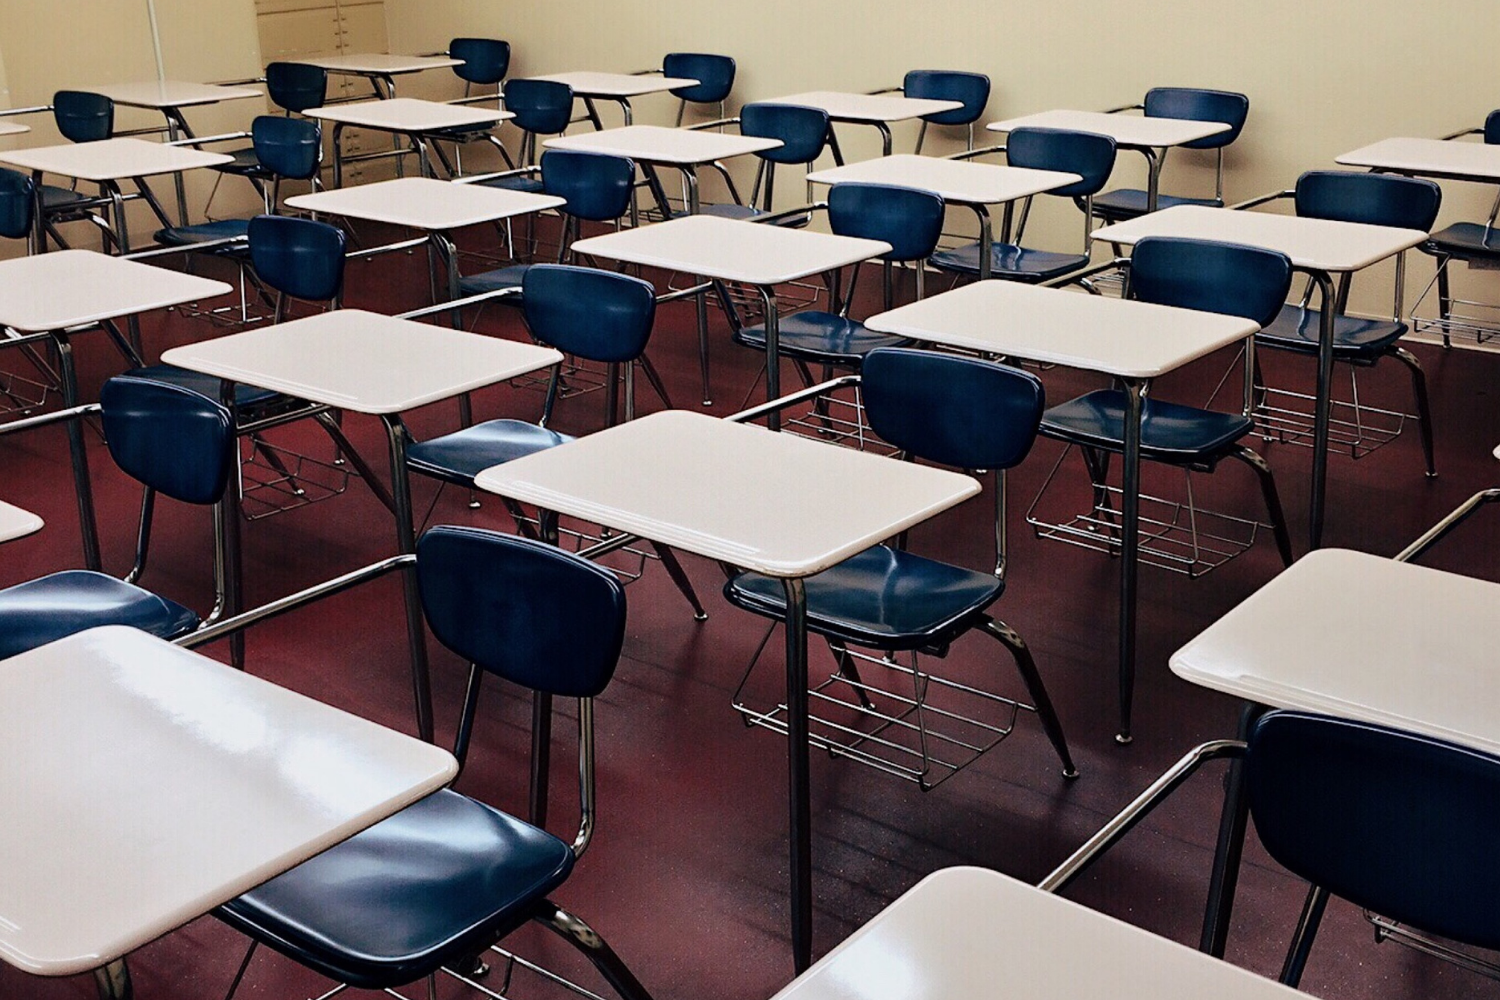 : An empty classroom in a New York Public School.